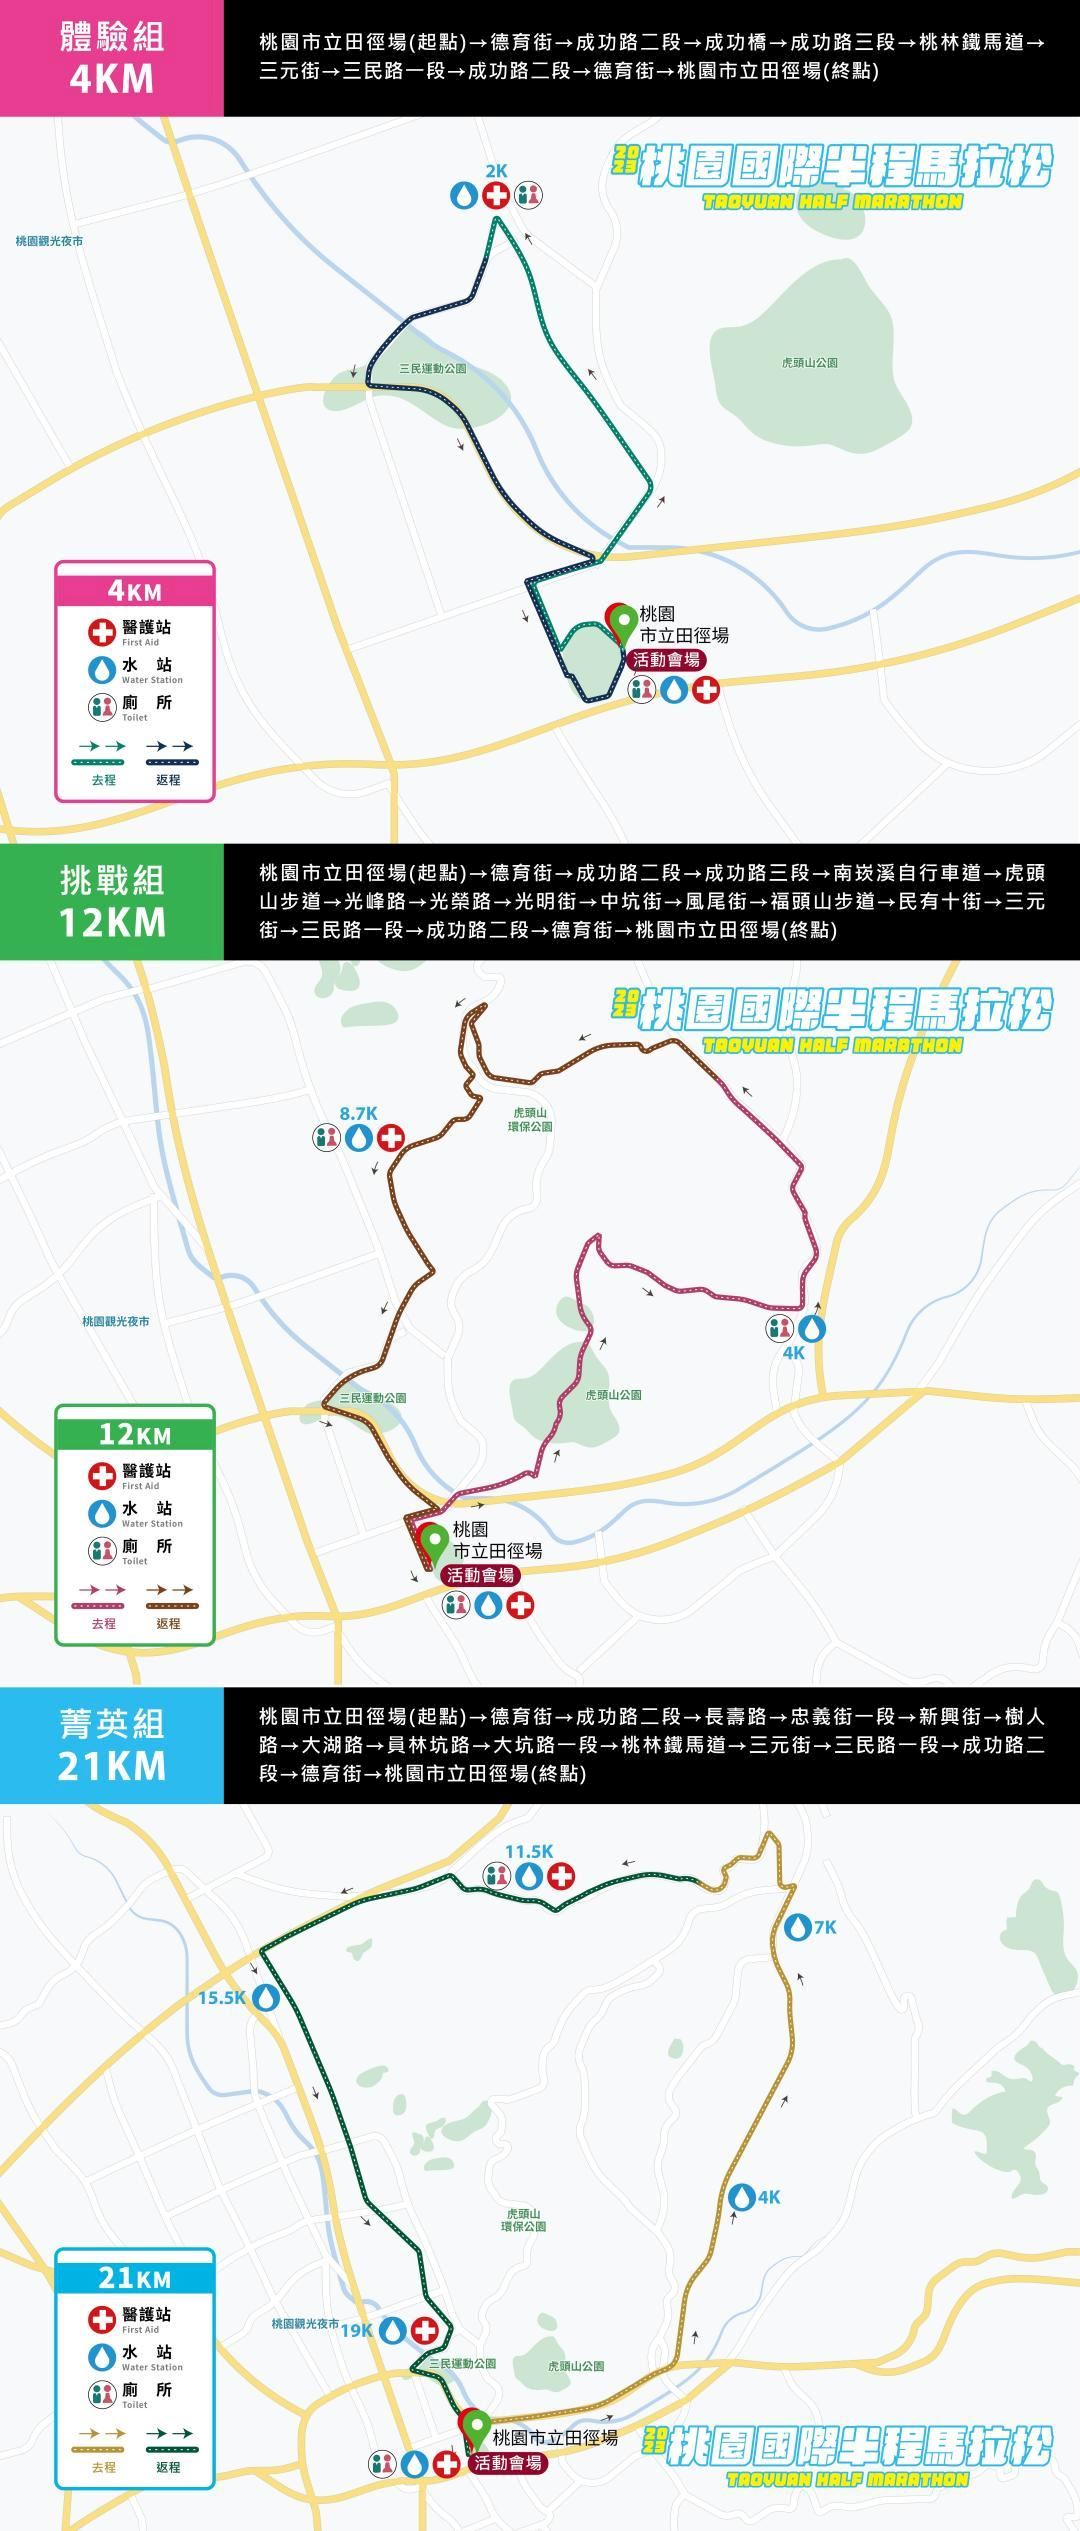 Taoyuan Half Marathon Route Map